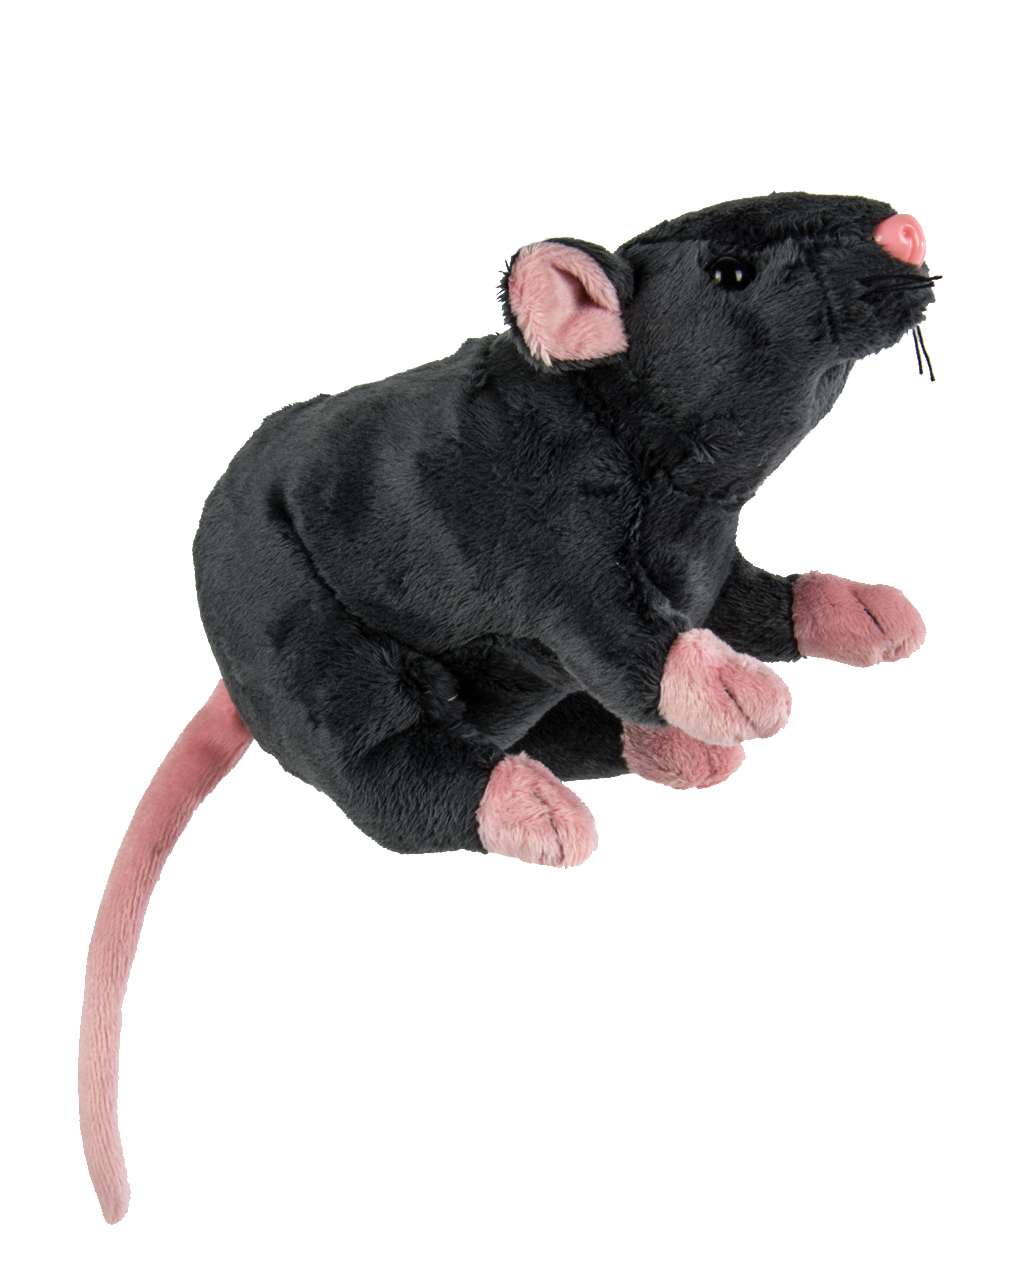 cuddly rat toy